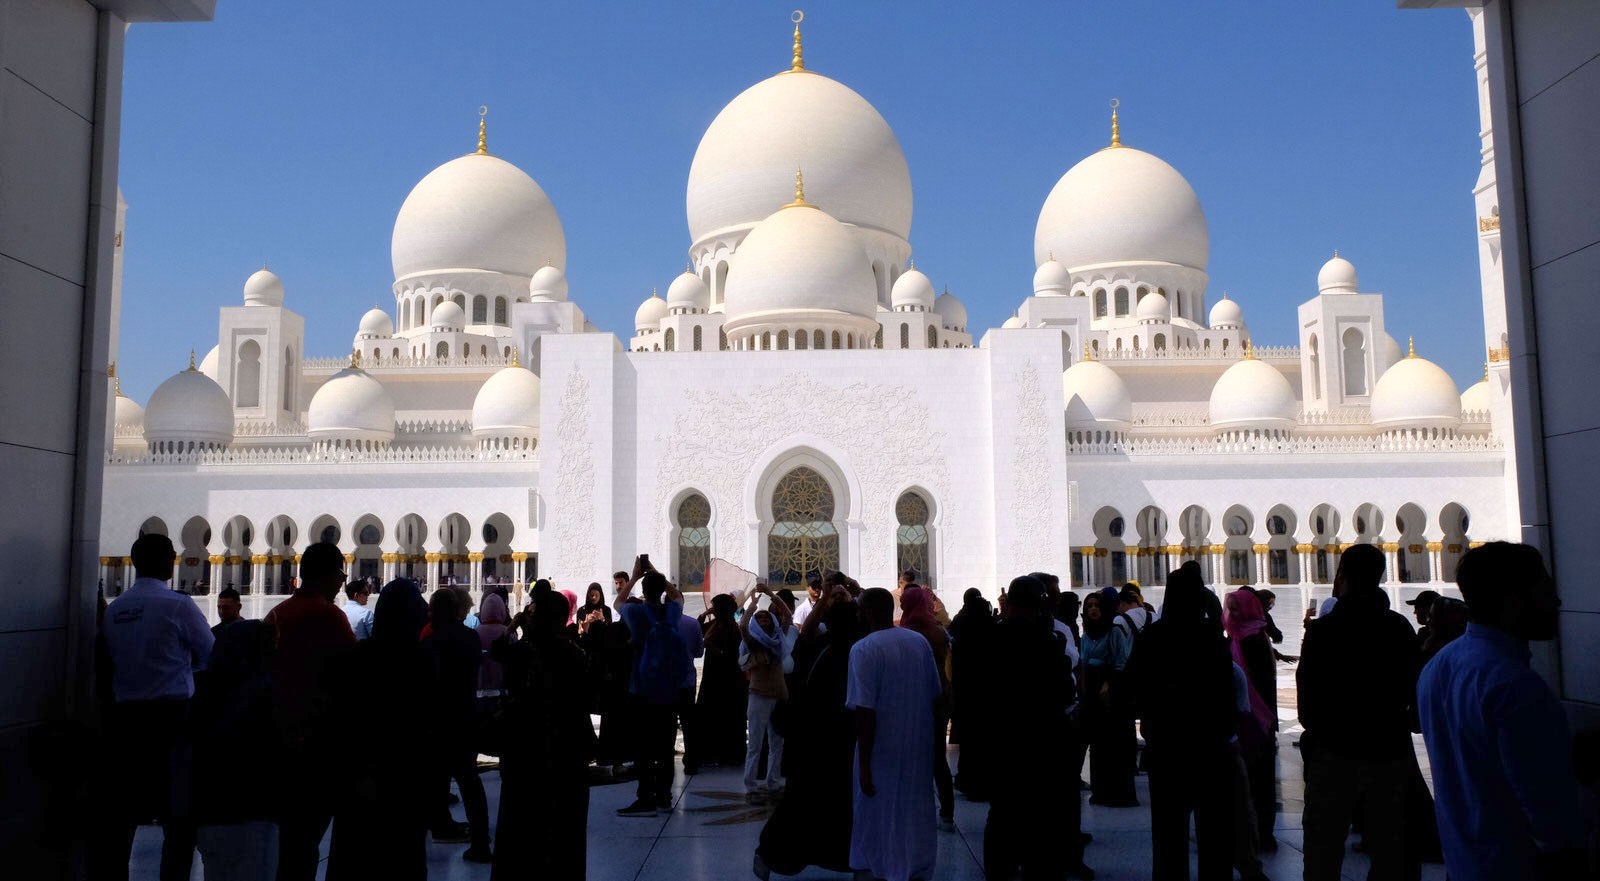 Street Photography - The Sheikh Zayed Grand Mosque - Abu Dhabi